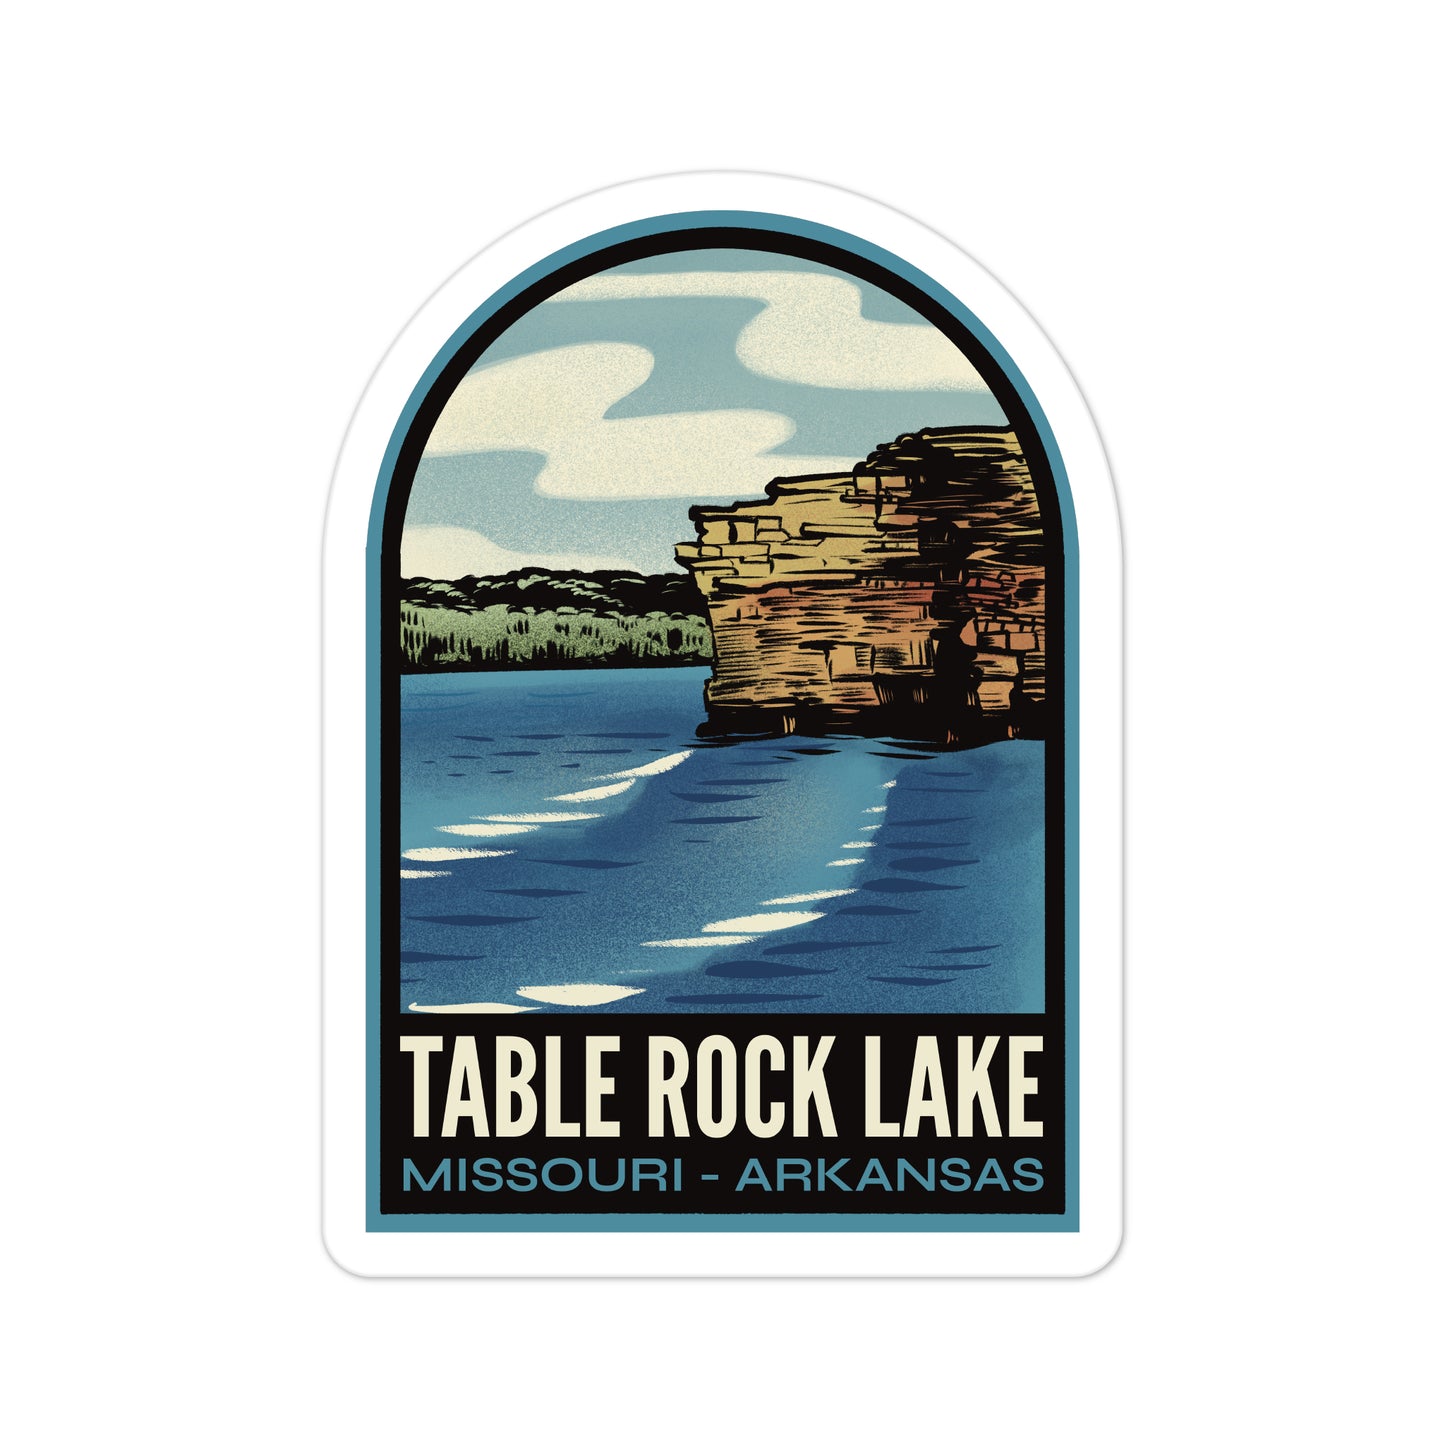 A sticker of Table Rock Lake